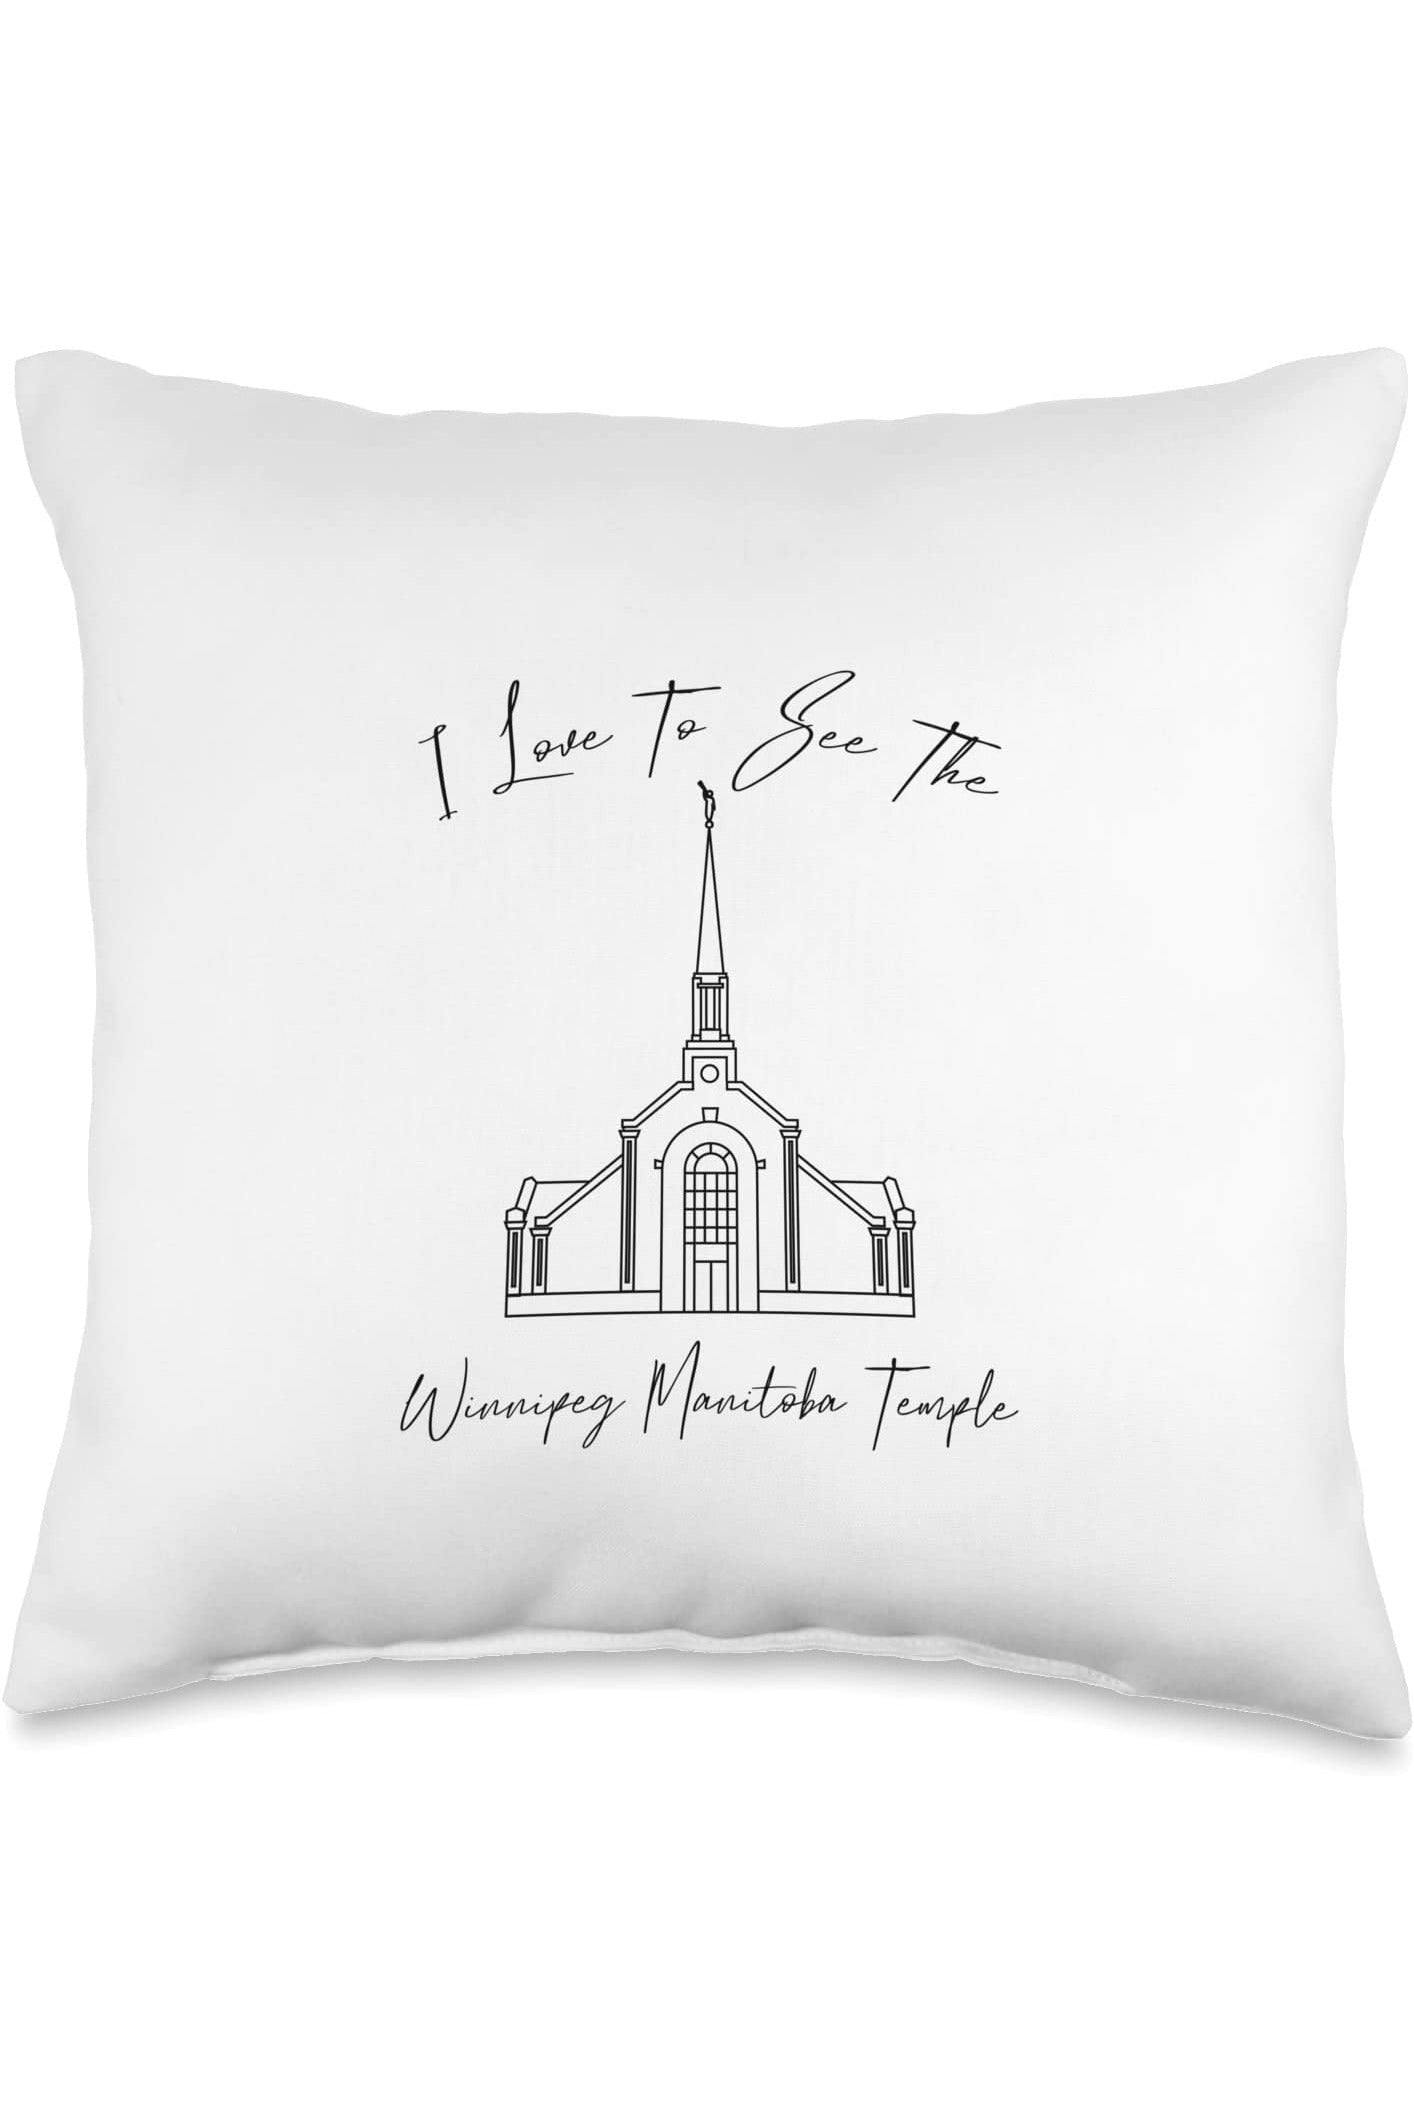 Winnipeg Manitoba Temple Throw Pillows - Calligraphy Style (English) US